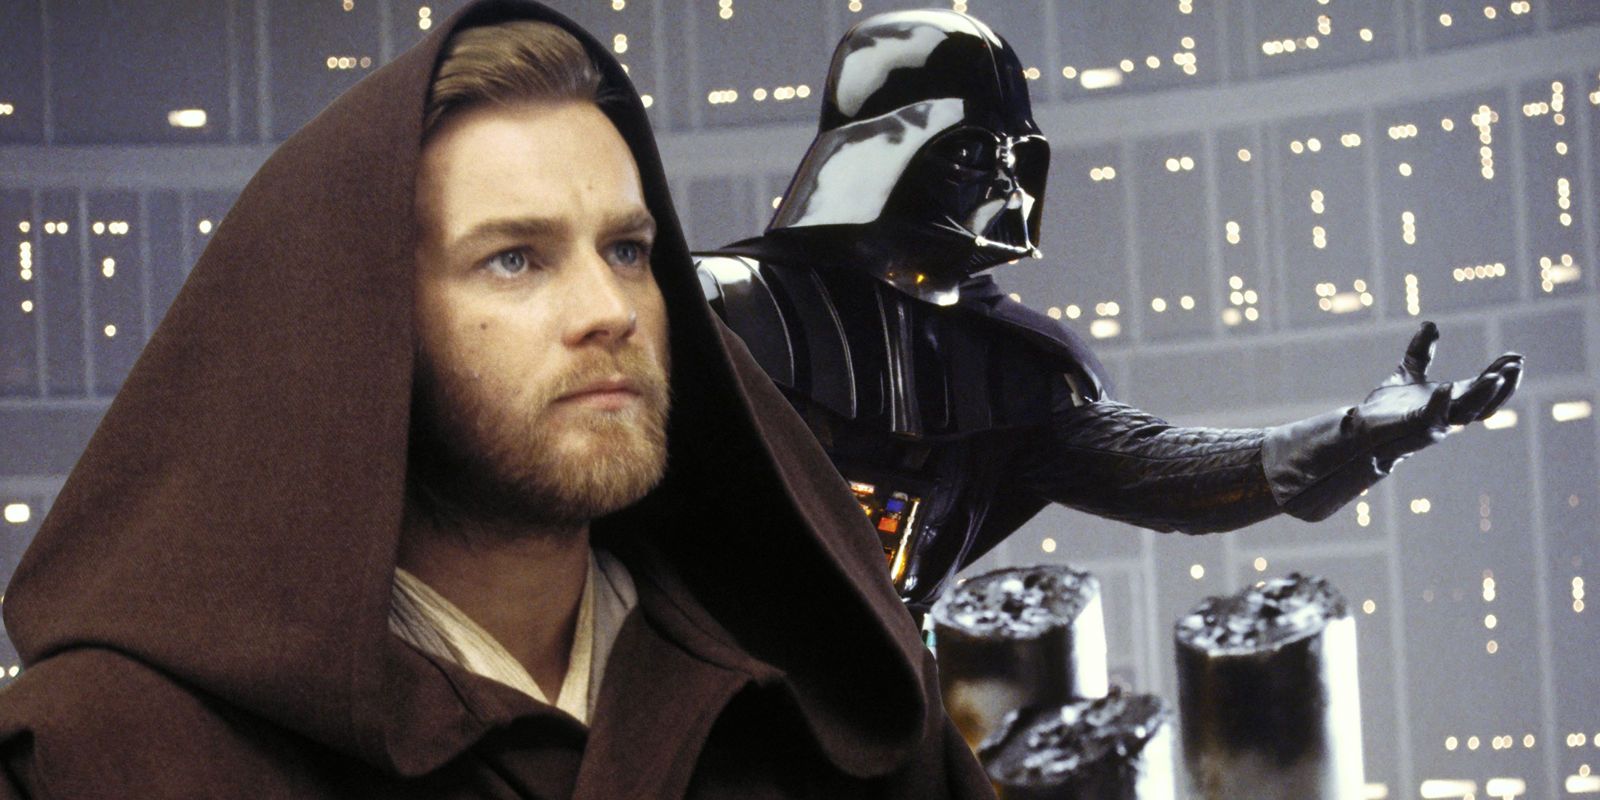 Darth Vader in Star Wars Empire Strikes Back Ewan McGregor as Obi-Wan Kenobi